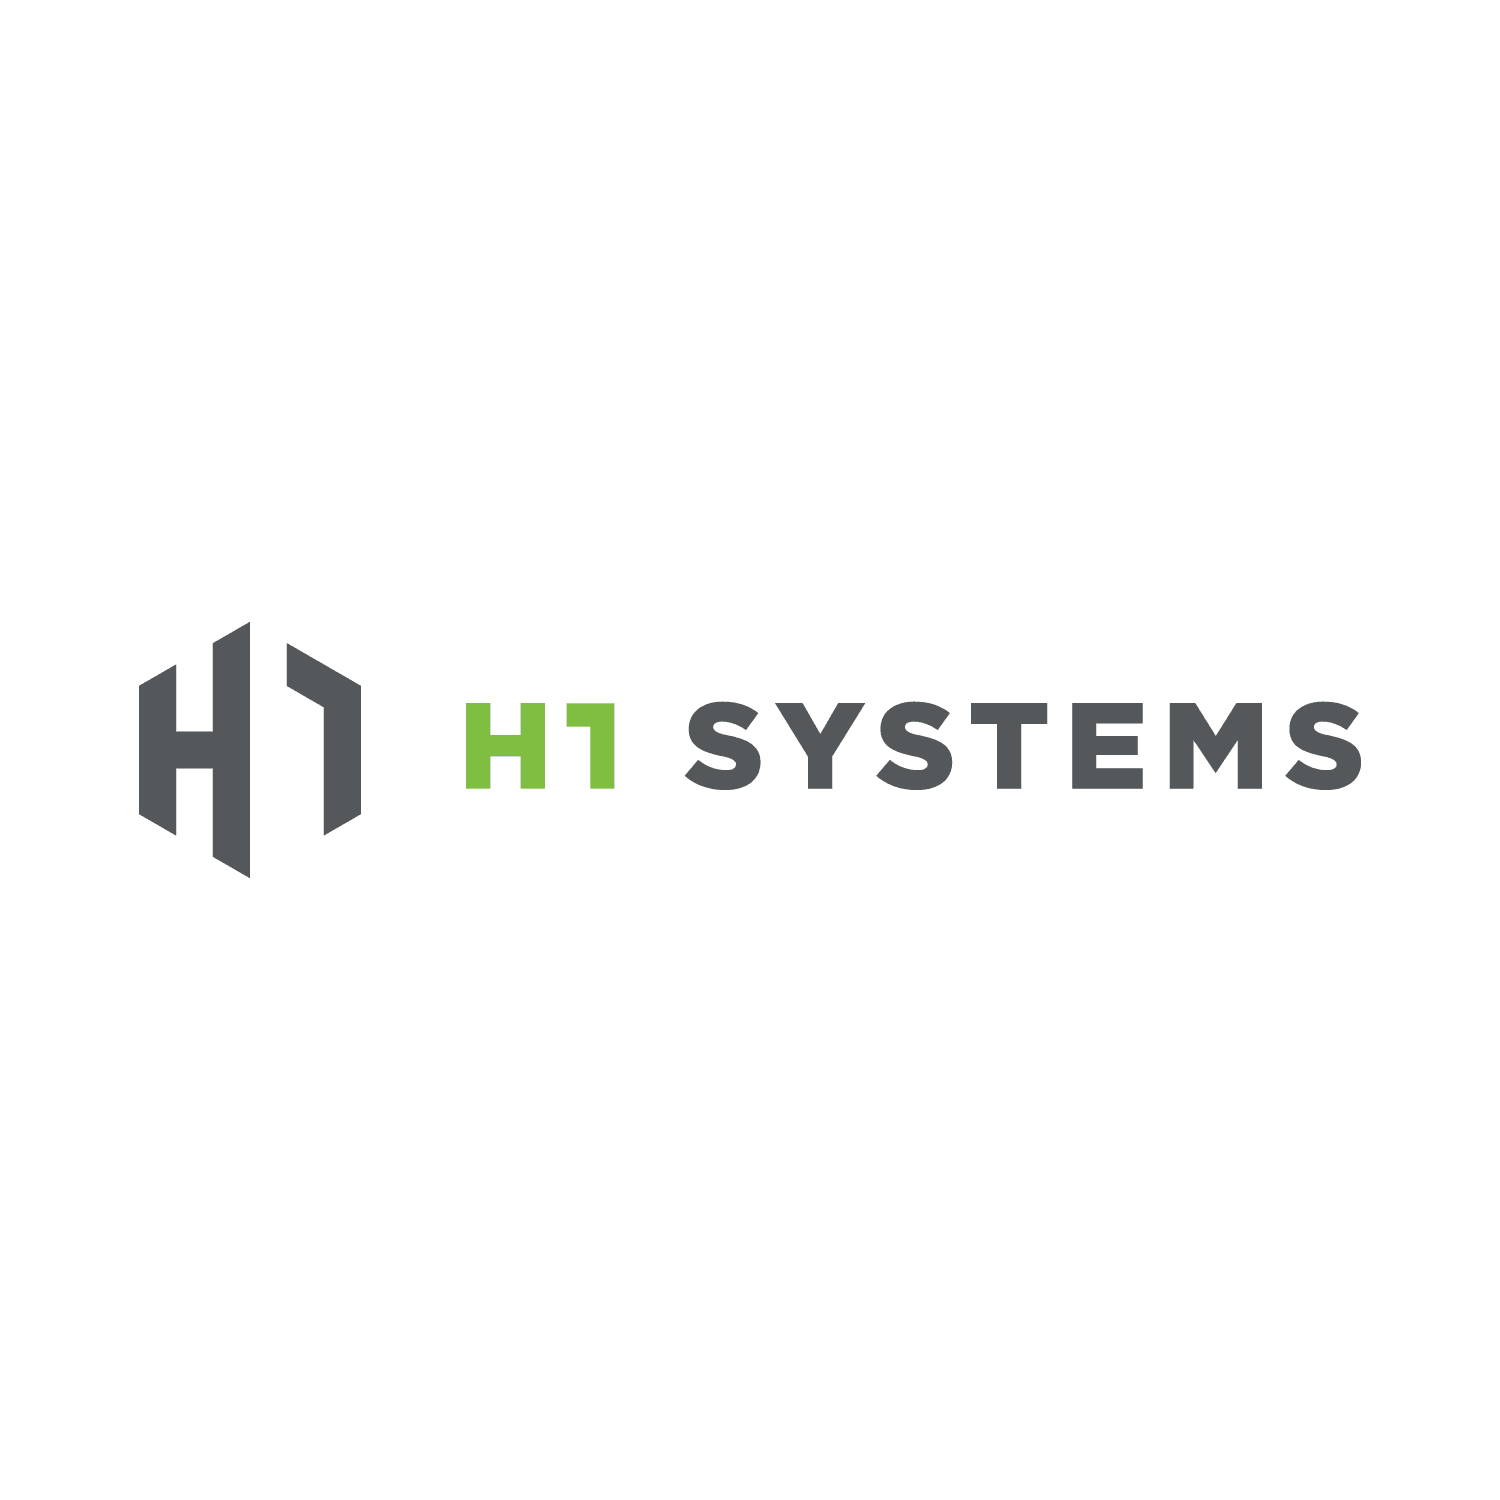 h1 system logo